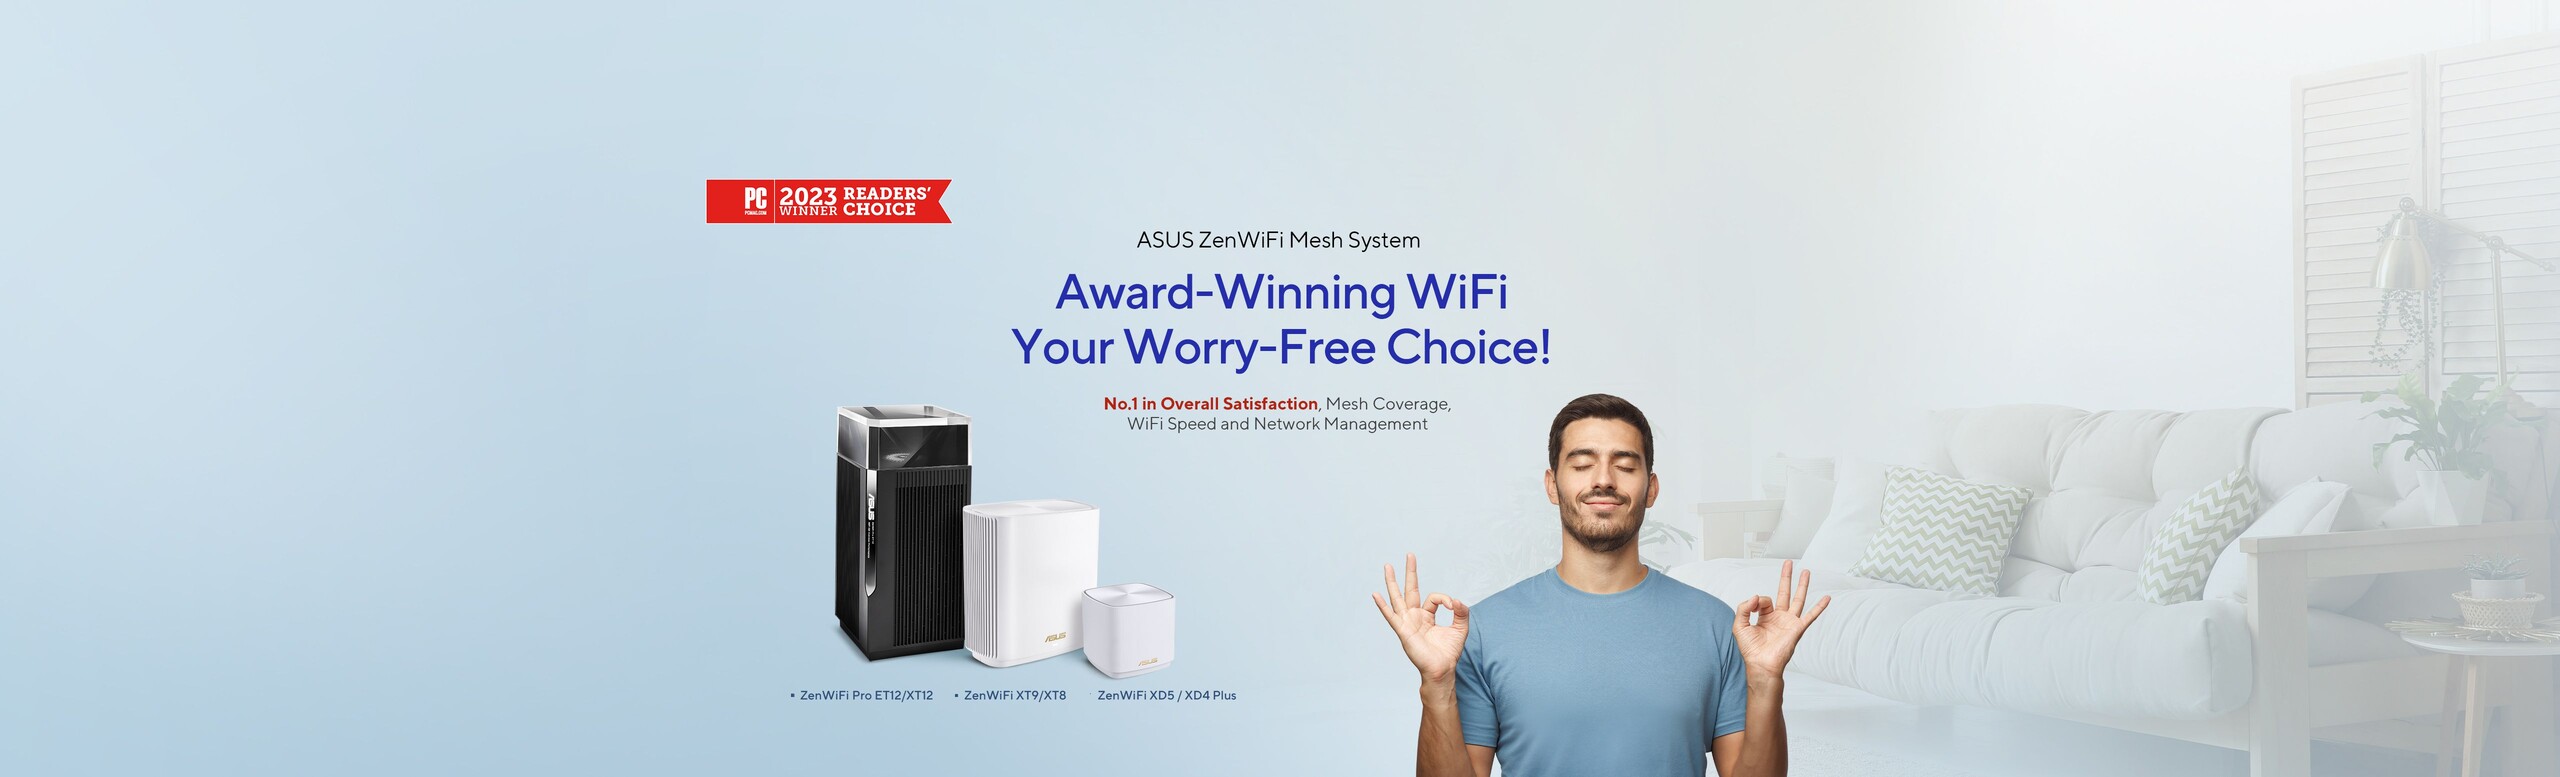 ASUS ZenWiFi Mesh System Award-Winning WiFi Your Worry-Free Choice!